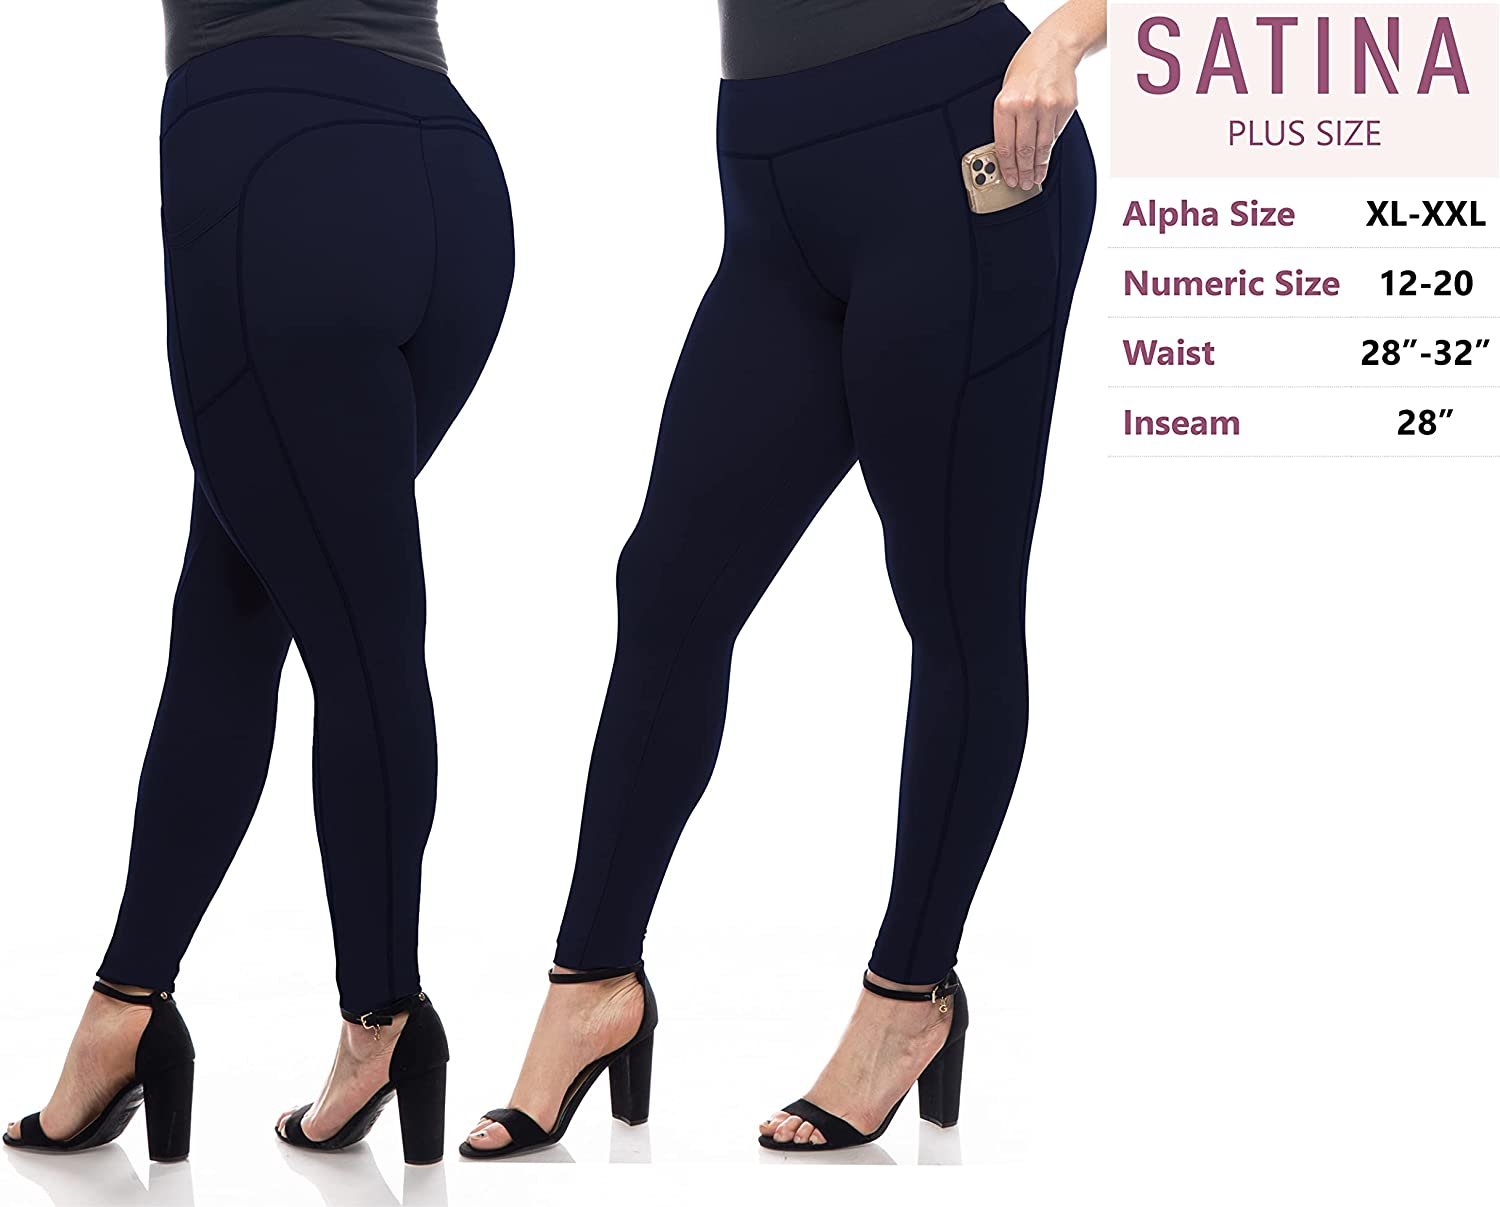 Super Soft SATINA High Waisted Yoga Leggings w/ Pockets | Navy | One Size